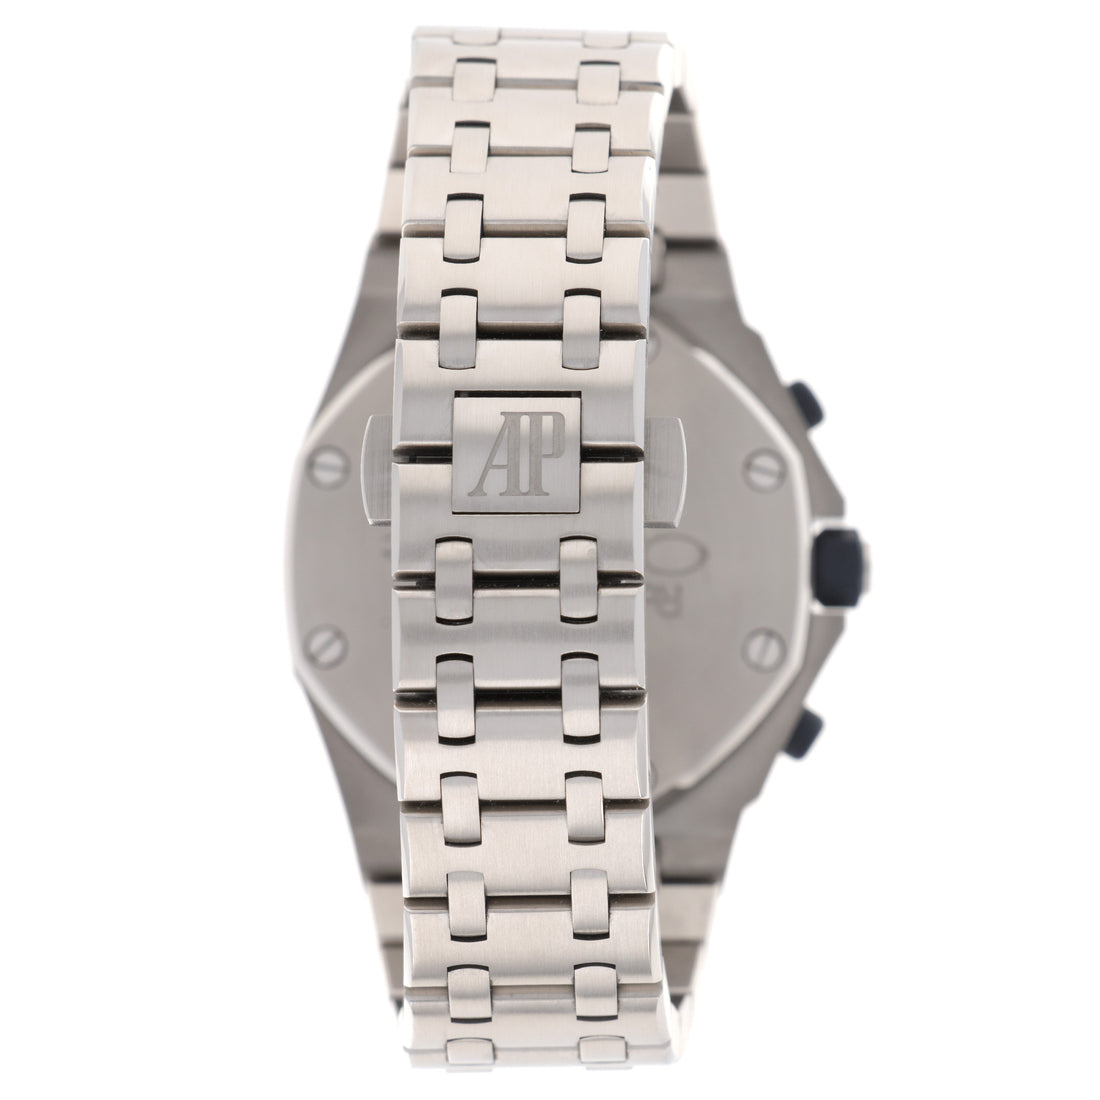 Audemars Piguet Royal Oak Offshore Chronograph Watch Ref. 26237